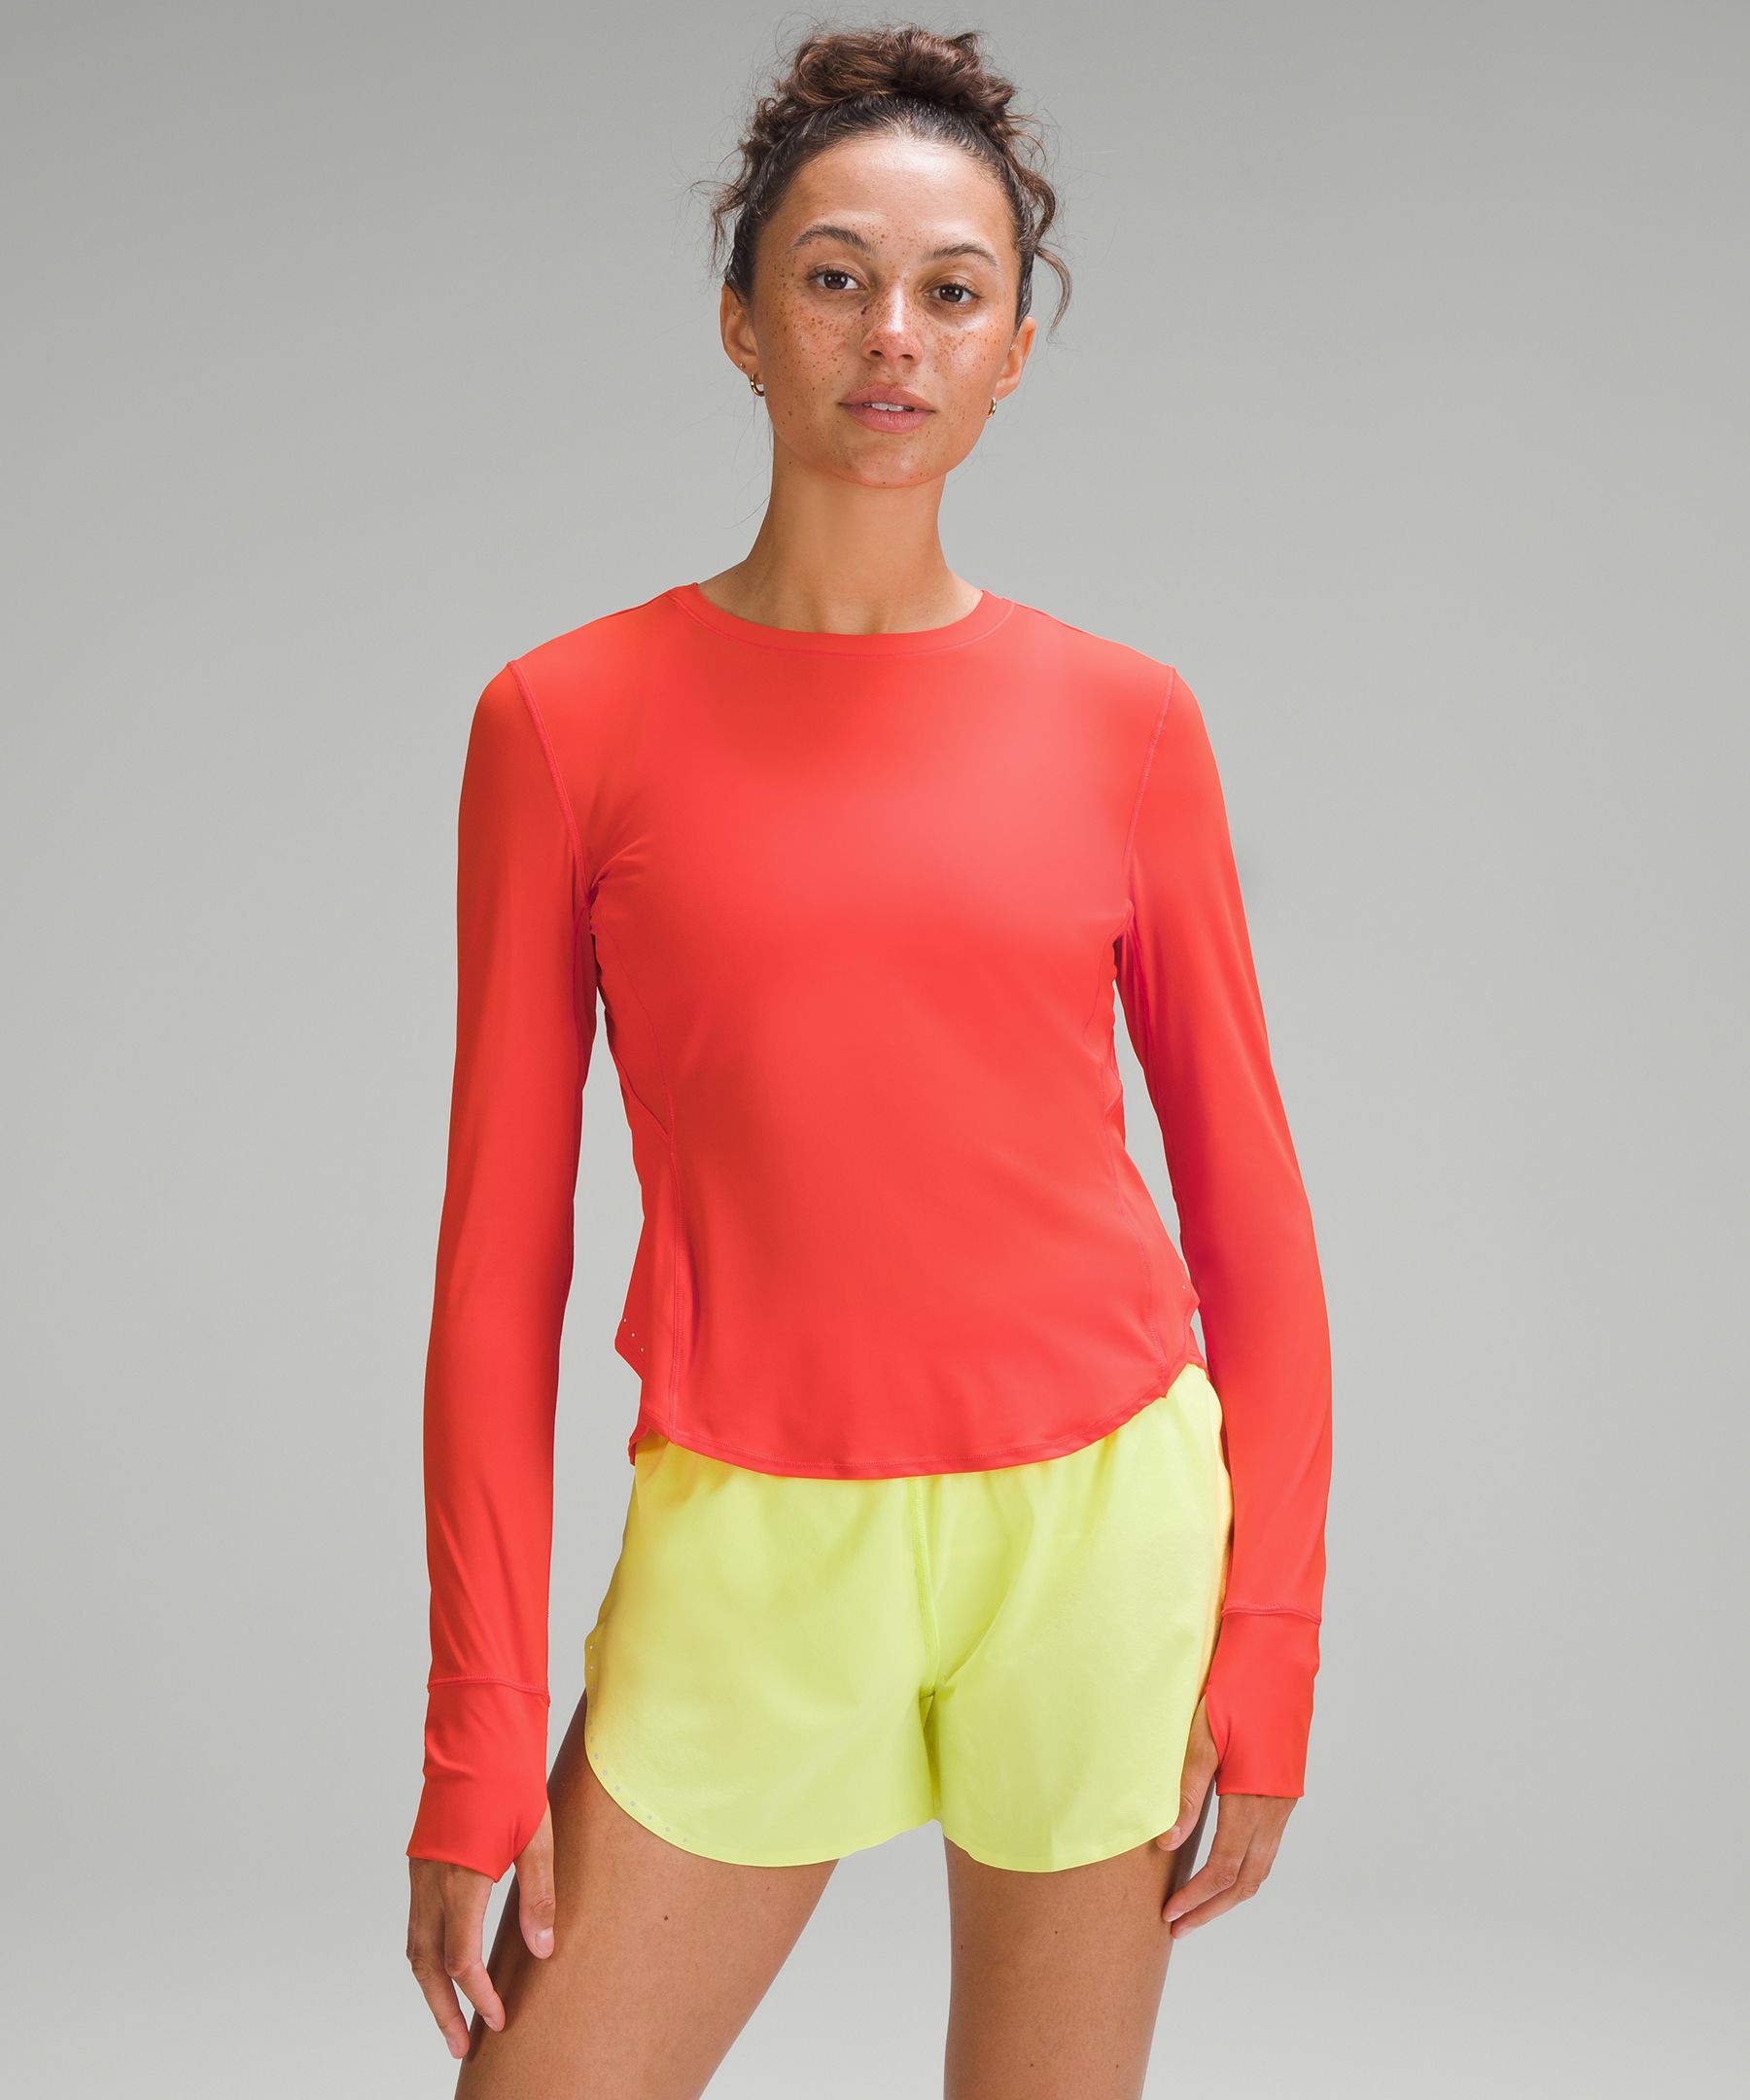 Lululemon UV Protection Fold-Over Running Long-Sleeve Shirt